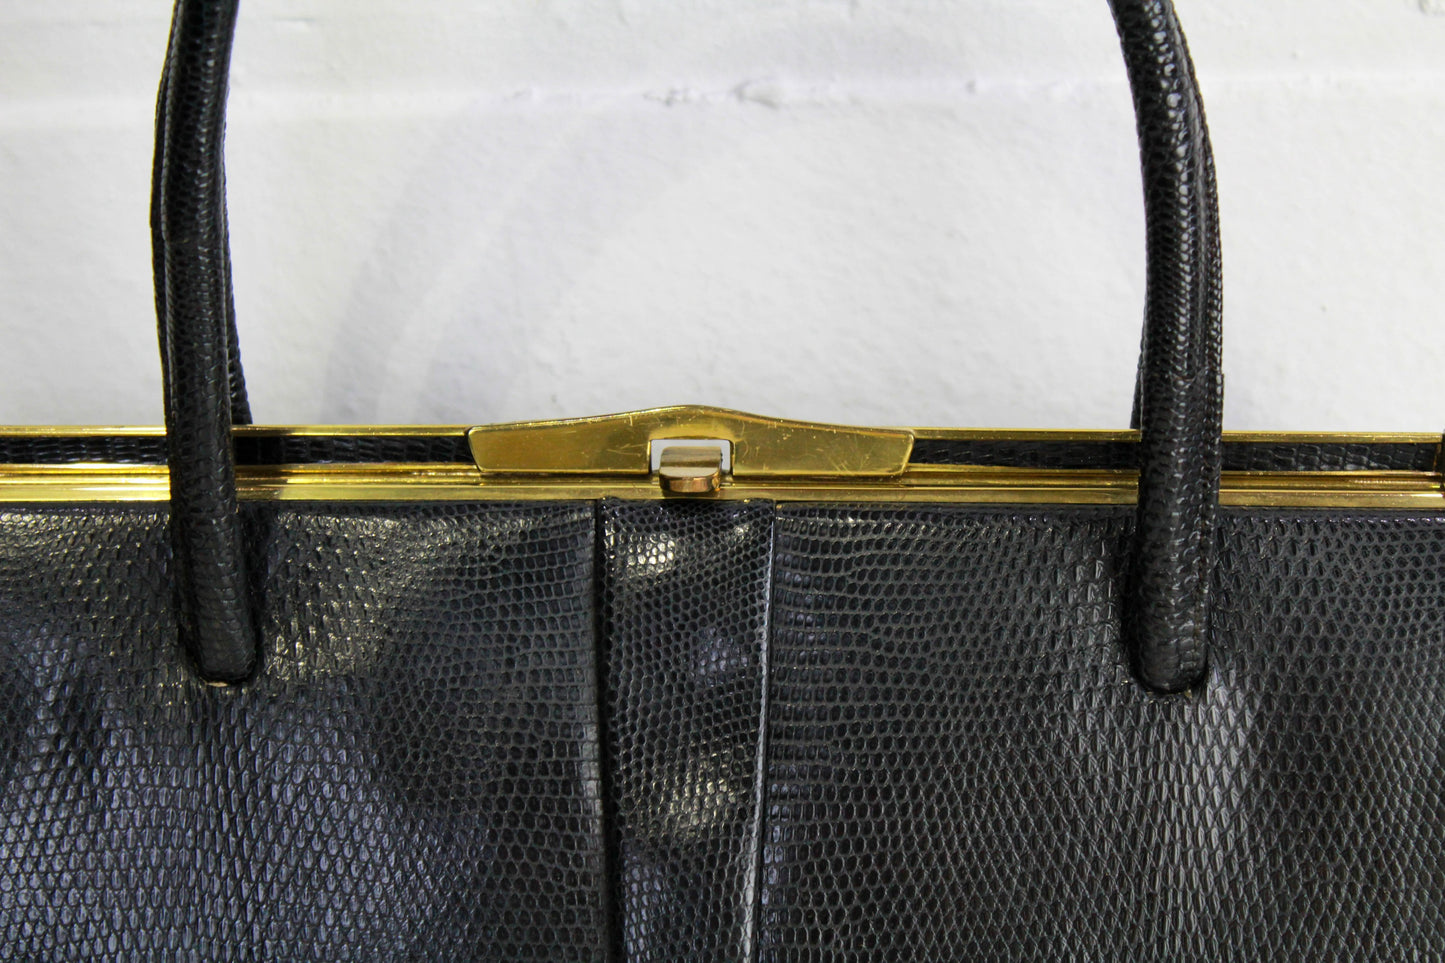 1960s Simpson's Black Leather Handbag Large Top Handle Purse Mid Century Close Up of Clasp